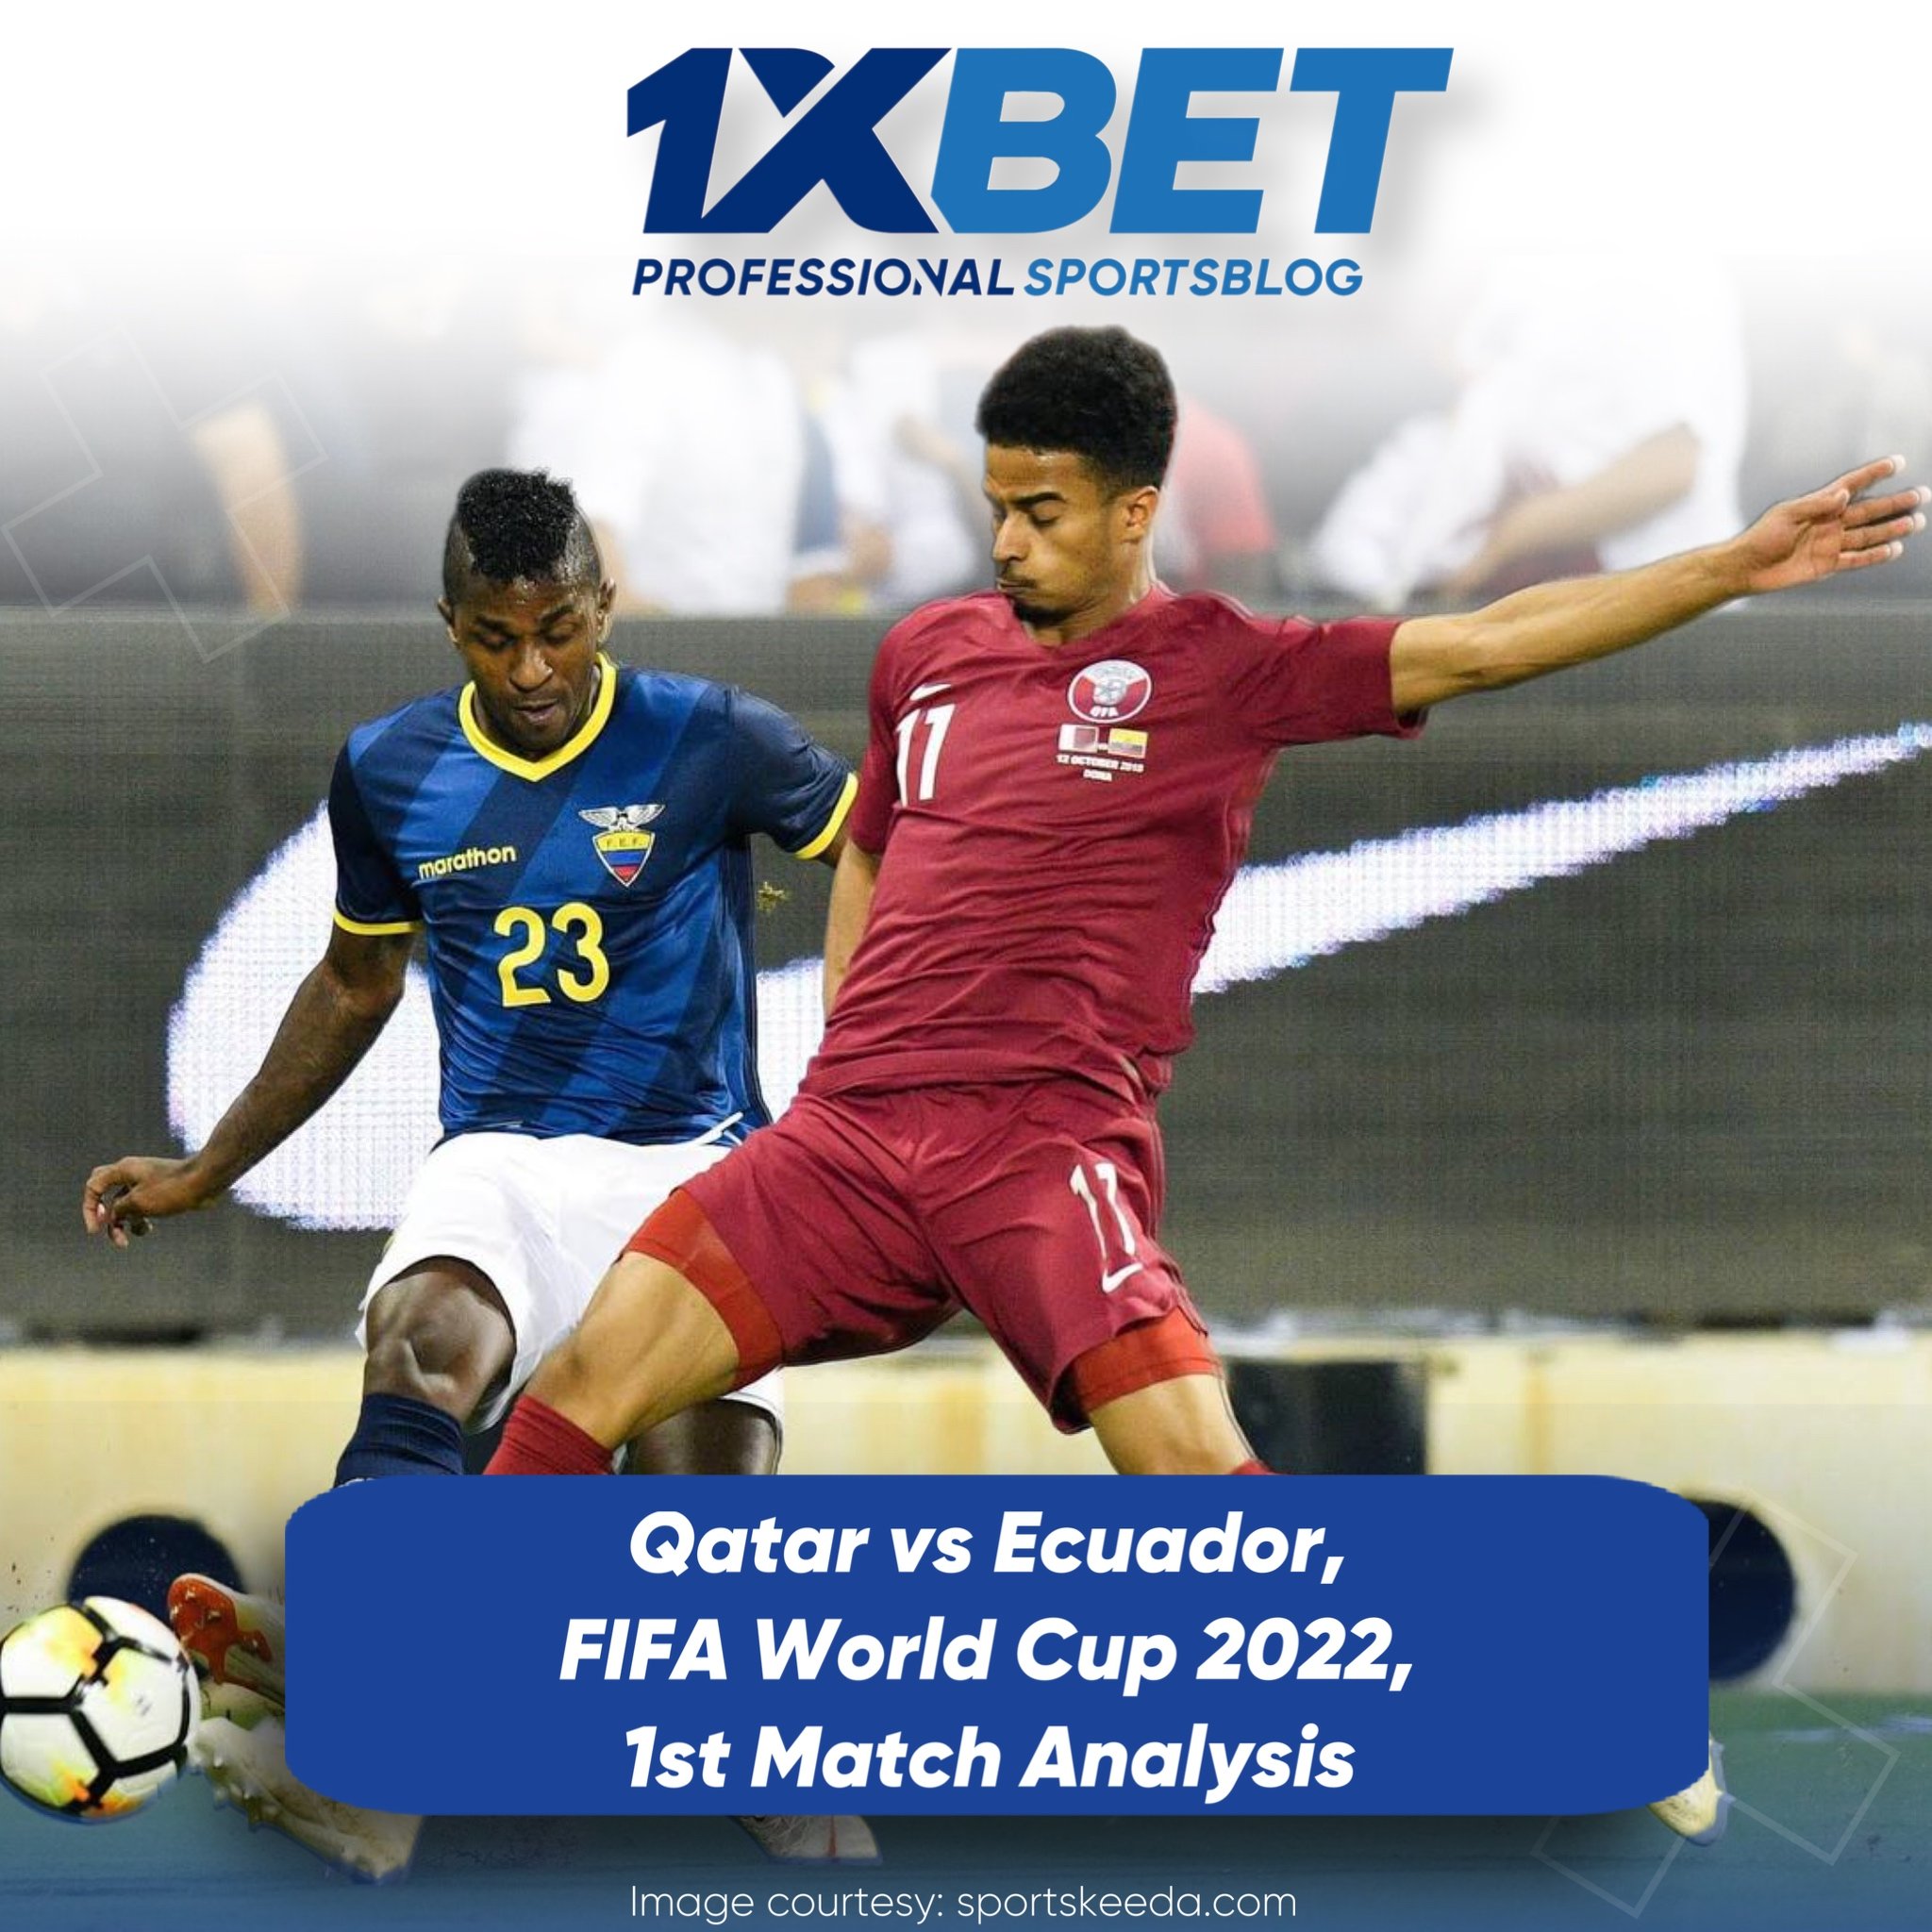 Qatar vs Ecuador, FIFA World Cup 2022, 1st Match Analysis